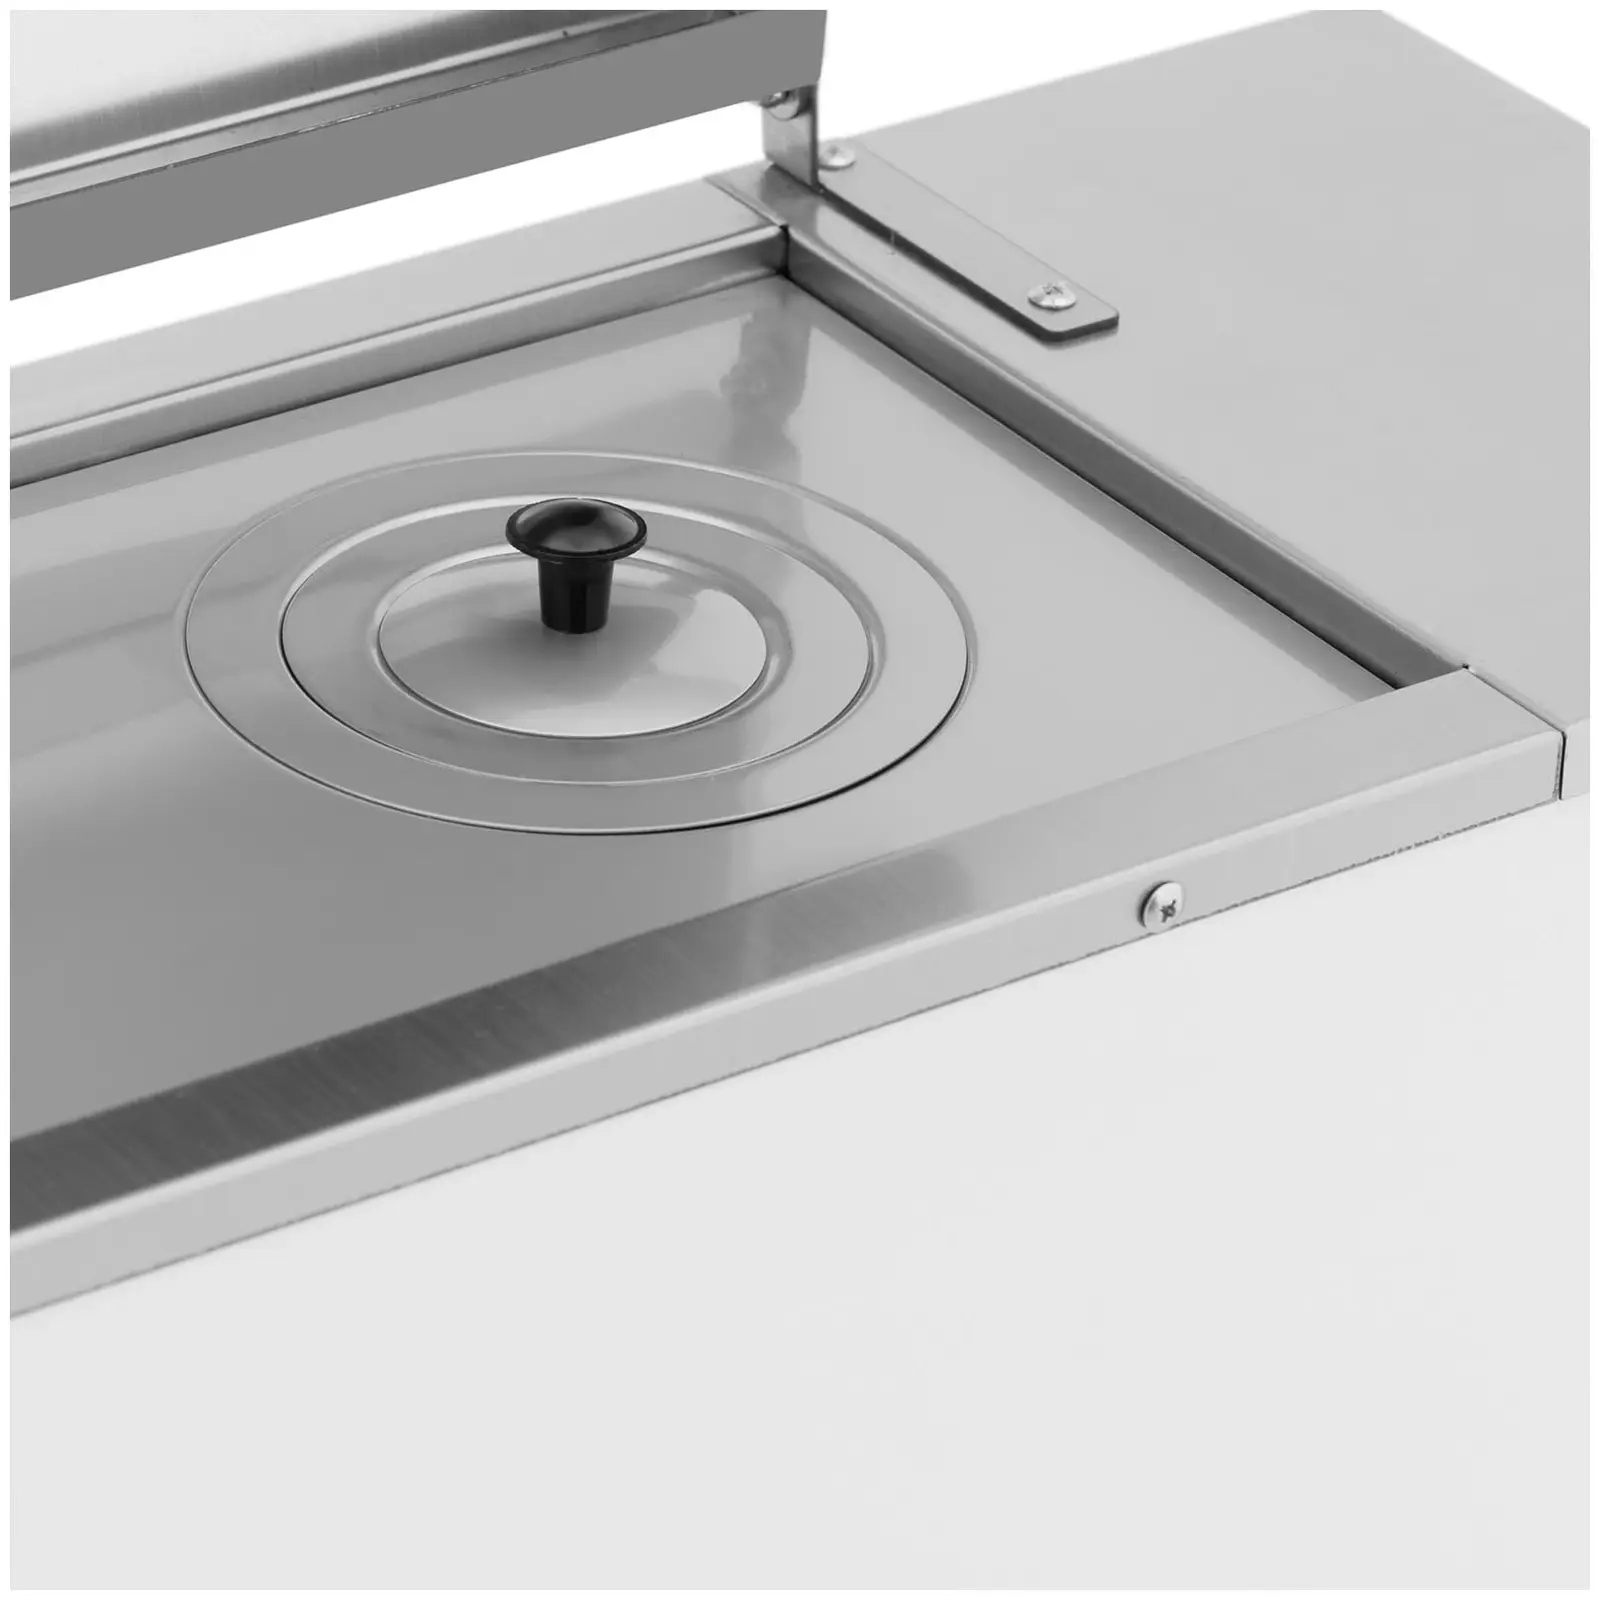 Thermostatic water bath - digital - 11 l - 5 - 100 °C - 420 x 180 x 150 mm